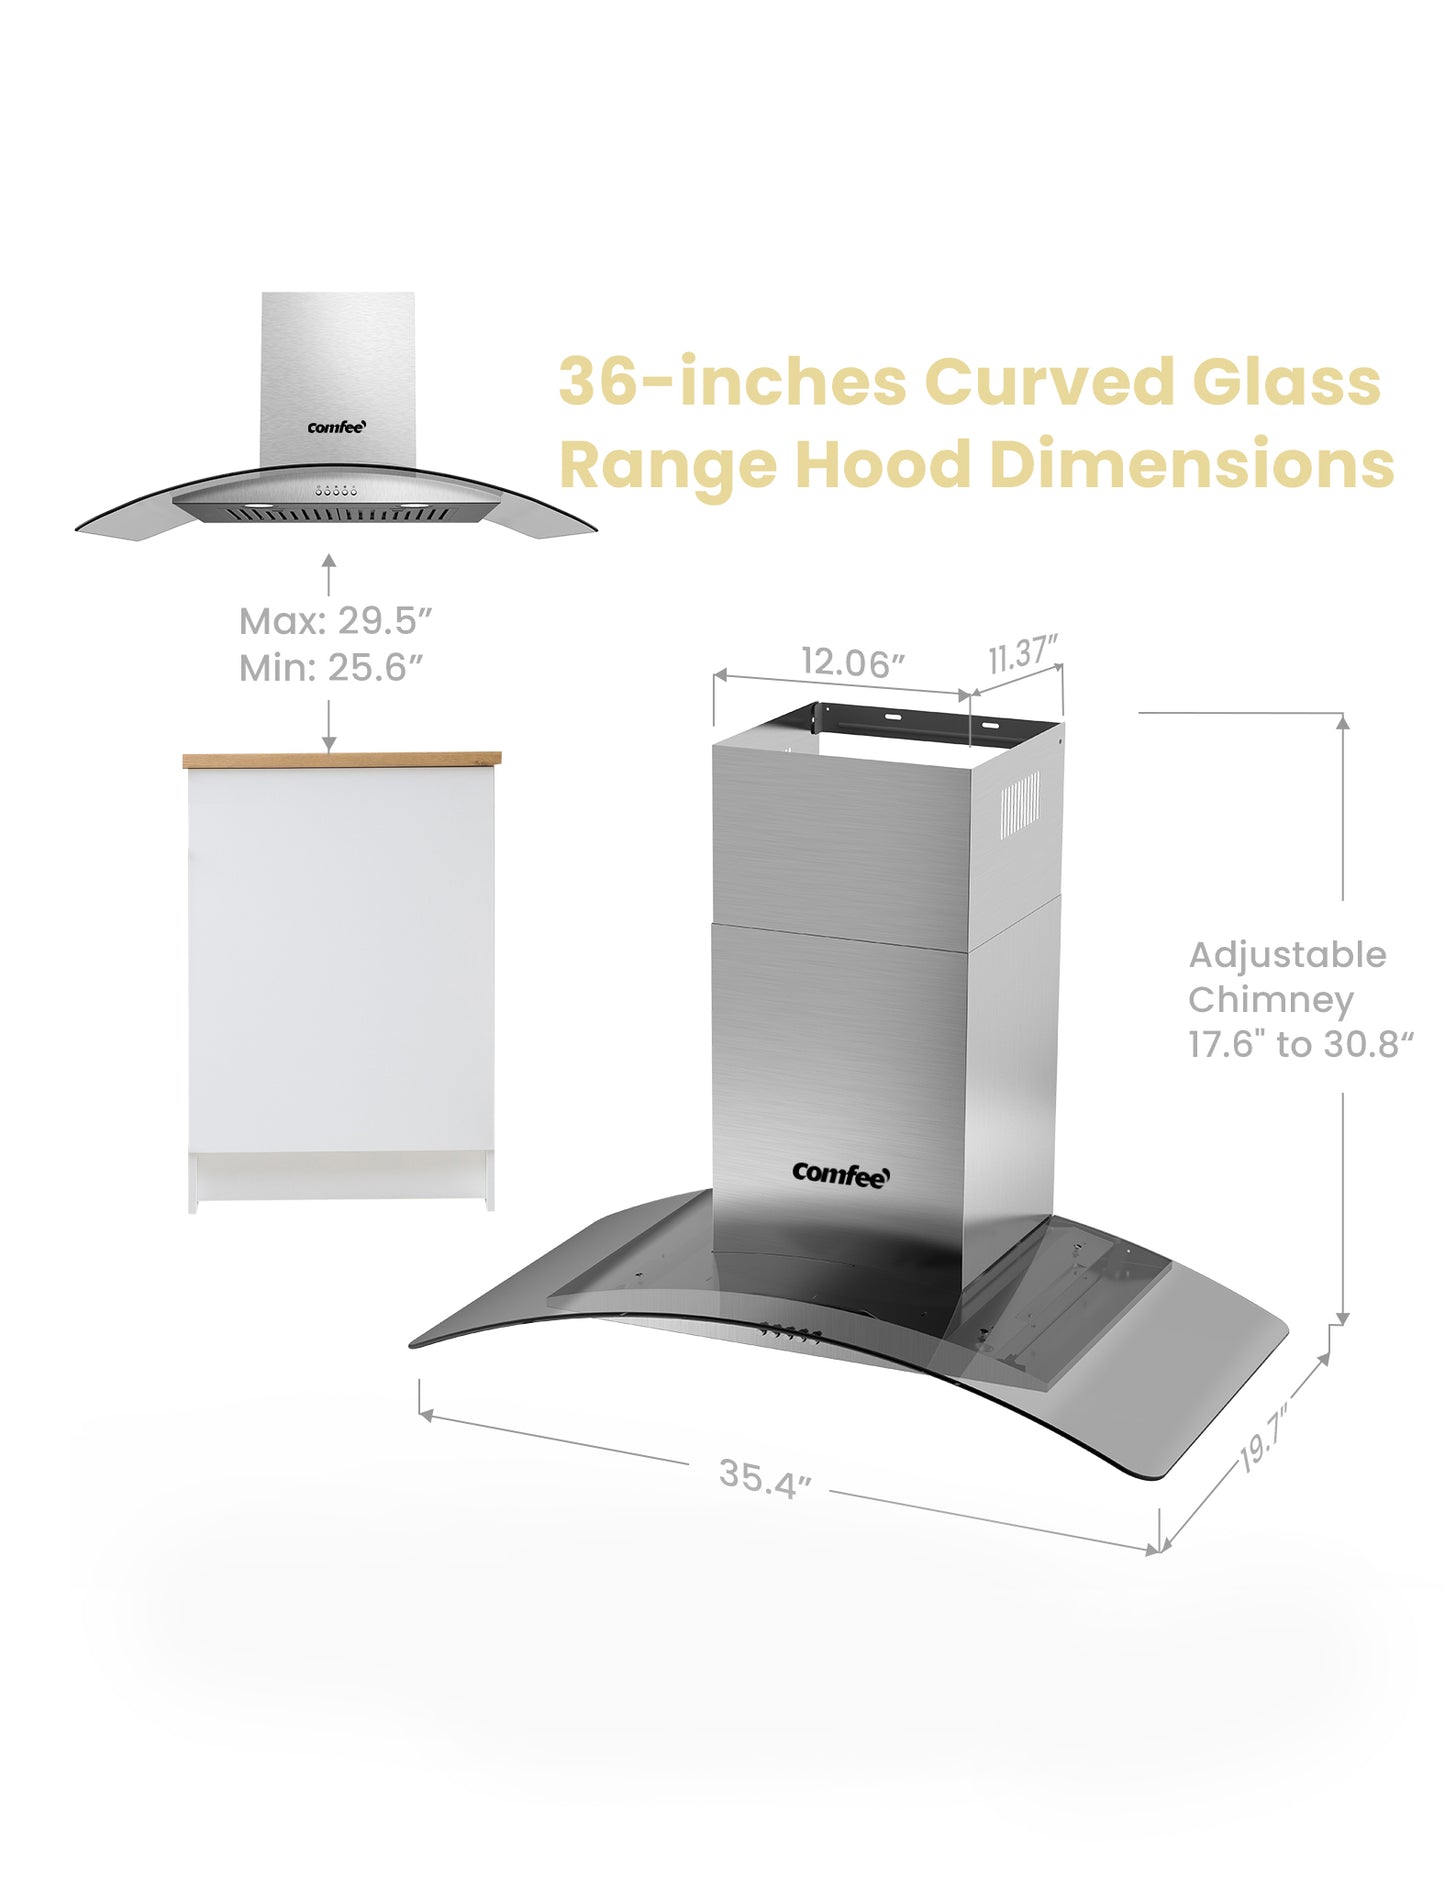 36" Curved Glass Gesture Sensing Control Range Hood